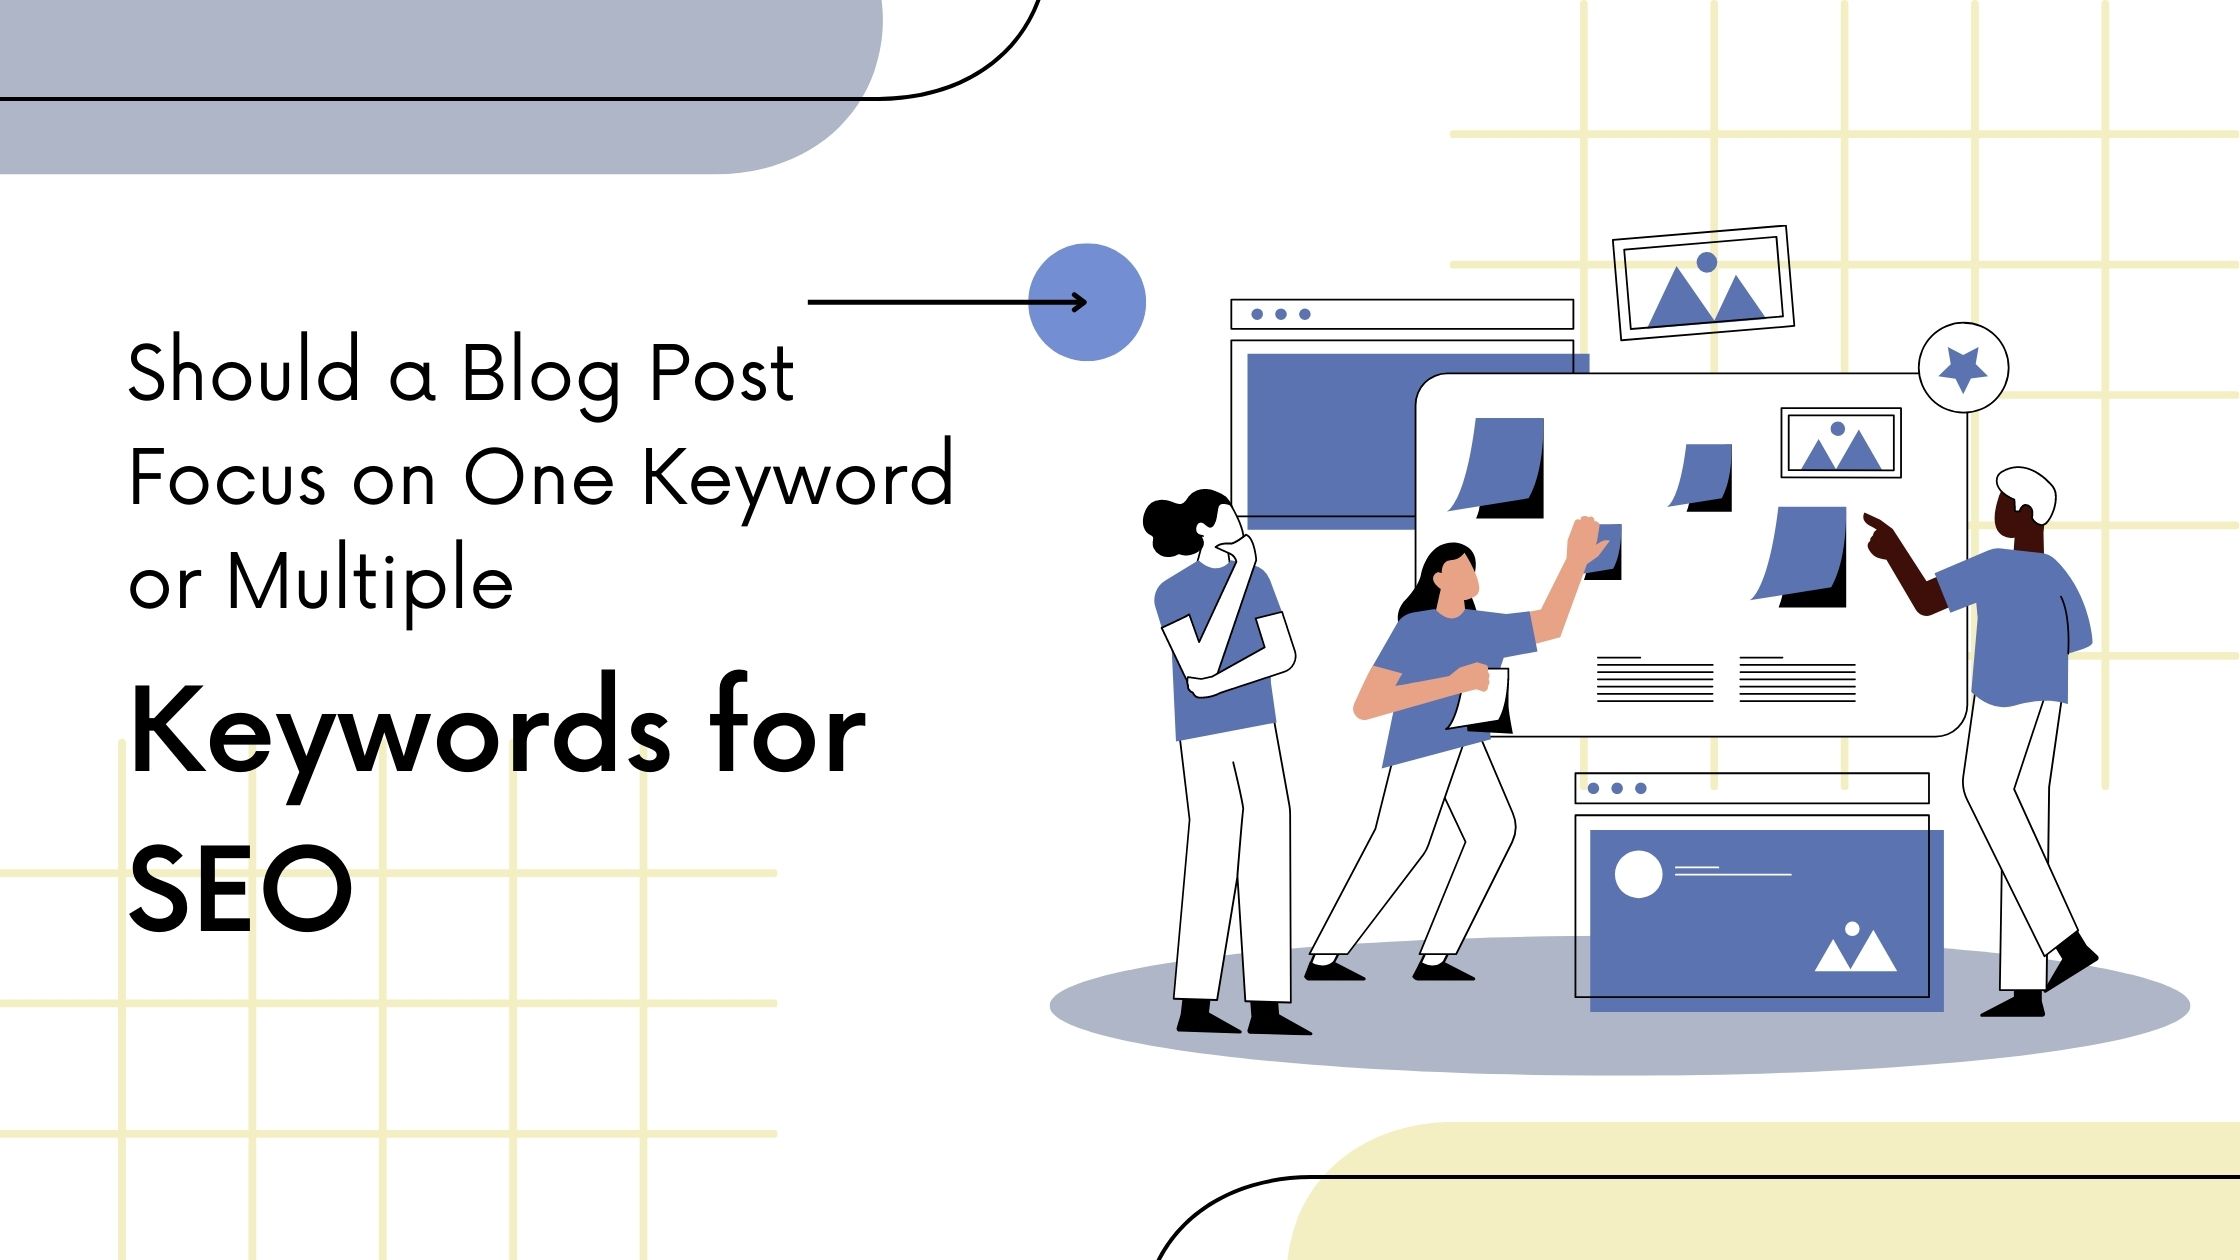 Should a Blog Post Focus on One Keyword or Multiple Keywords for SEO?